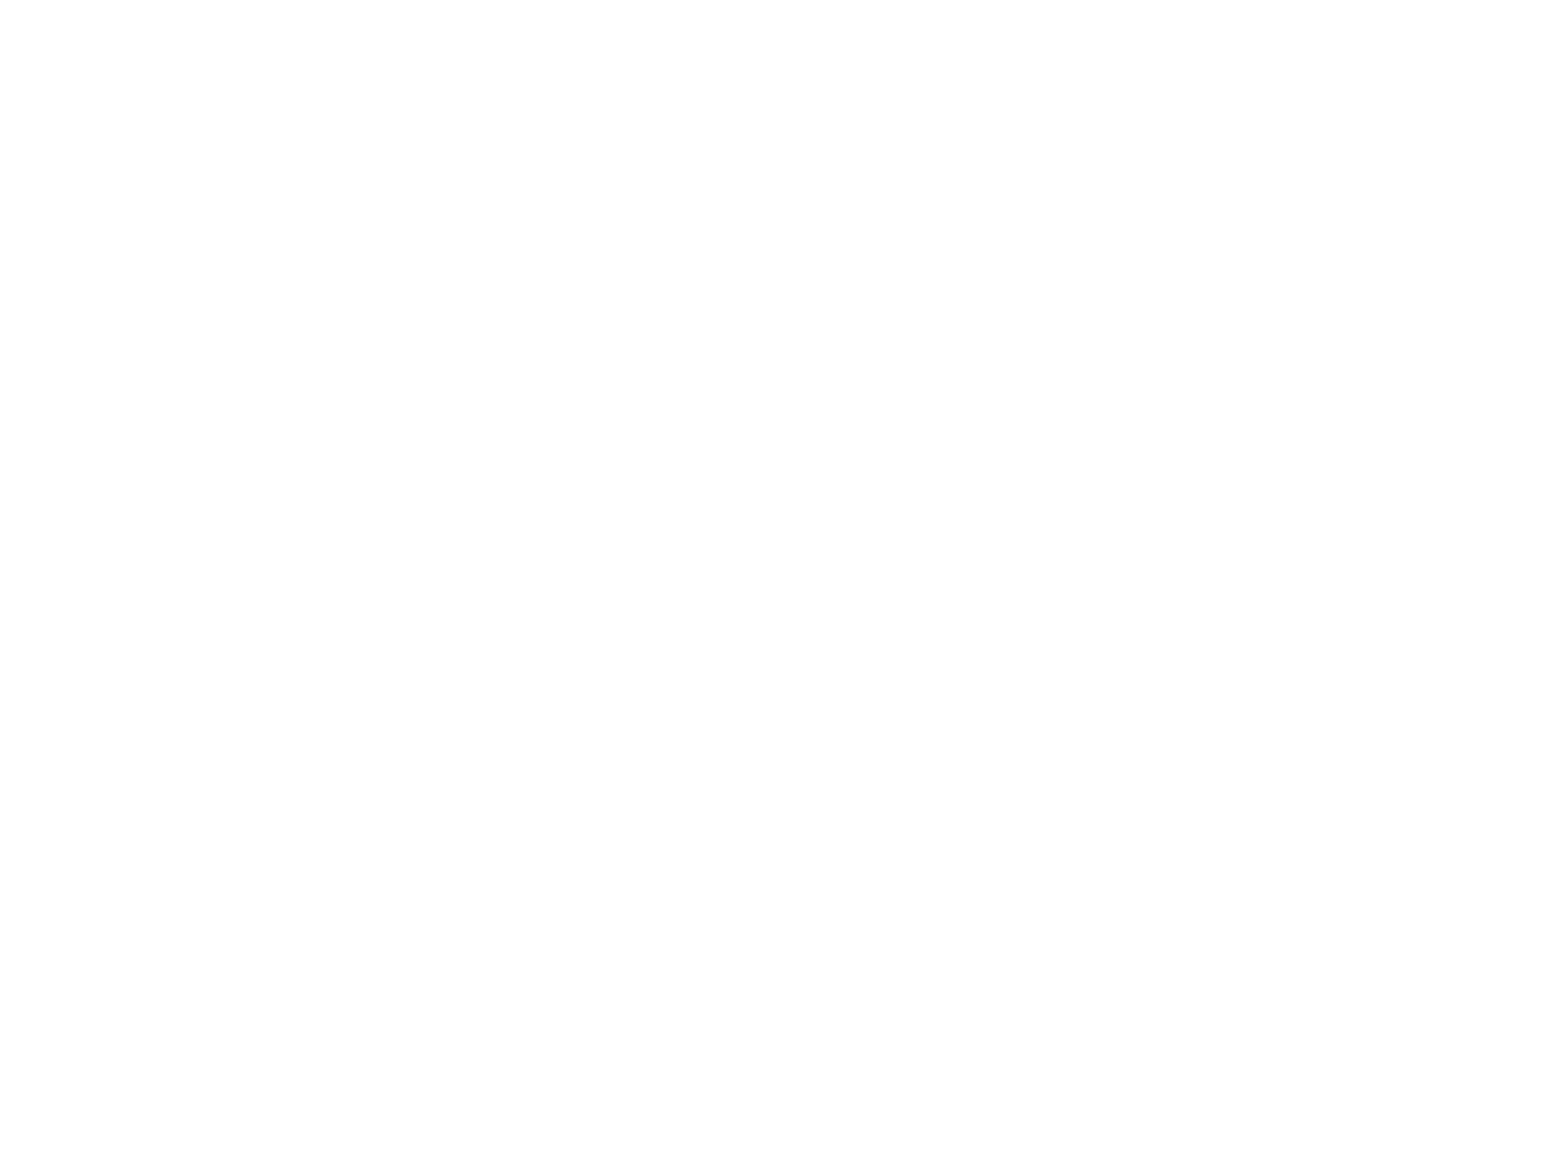 Computacenter logo for dark backgrounds (transparent PNG)